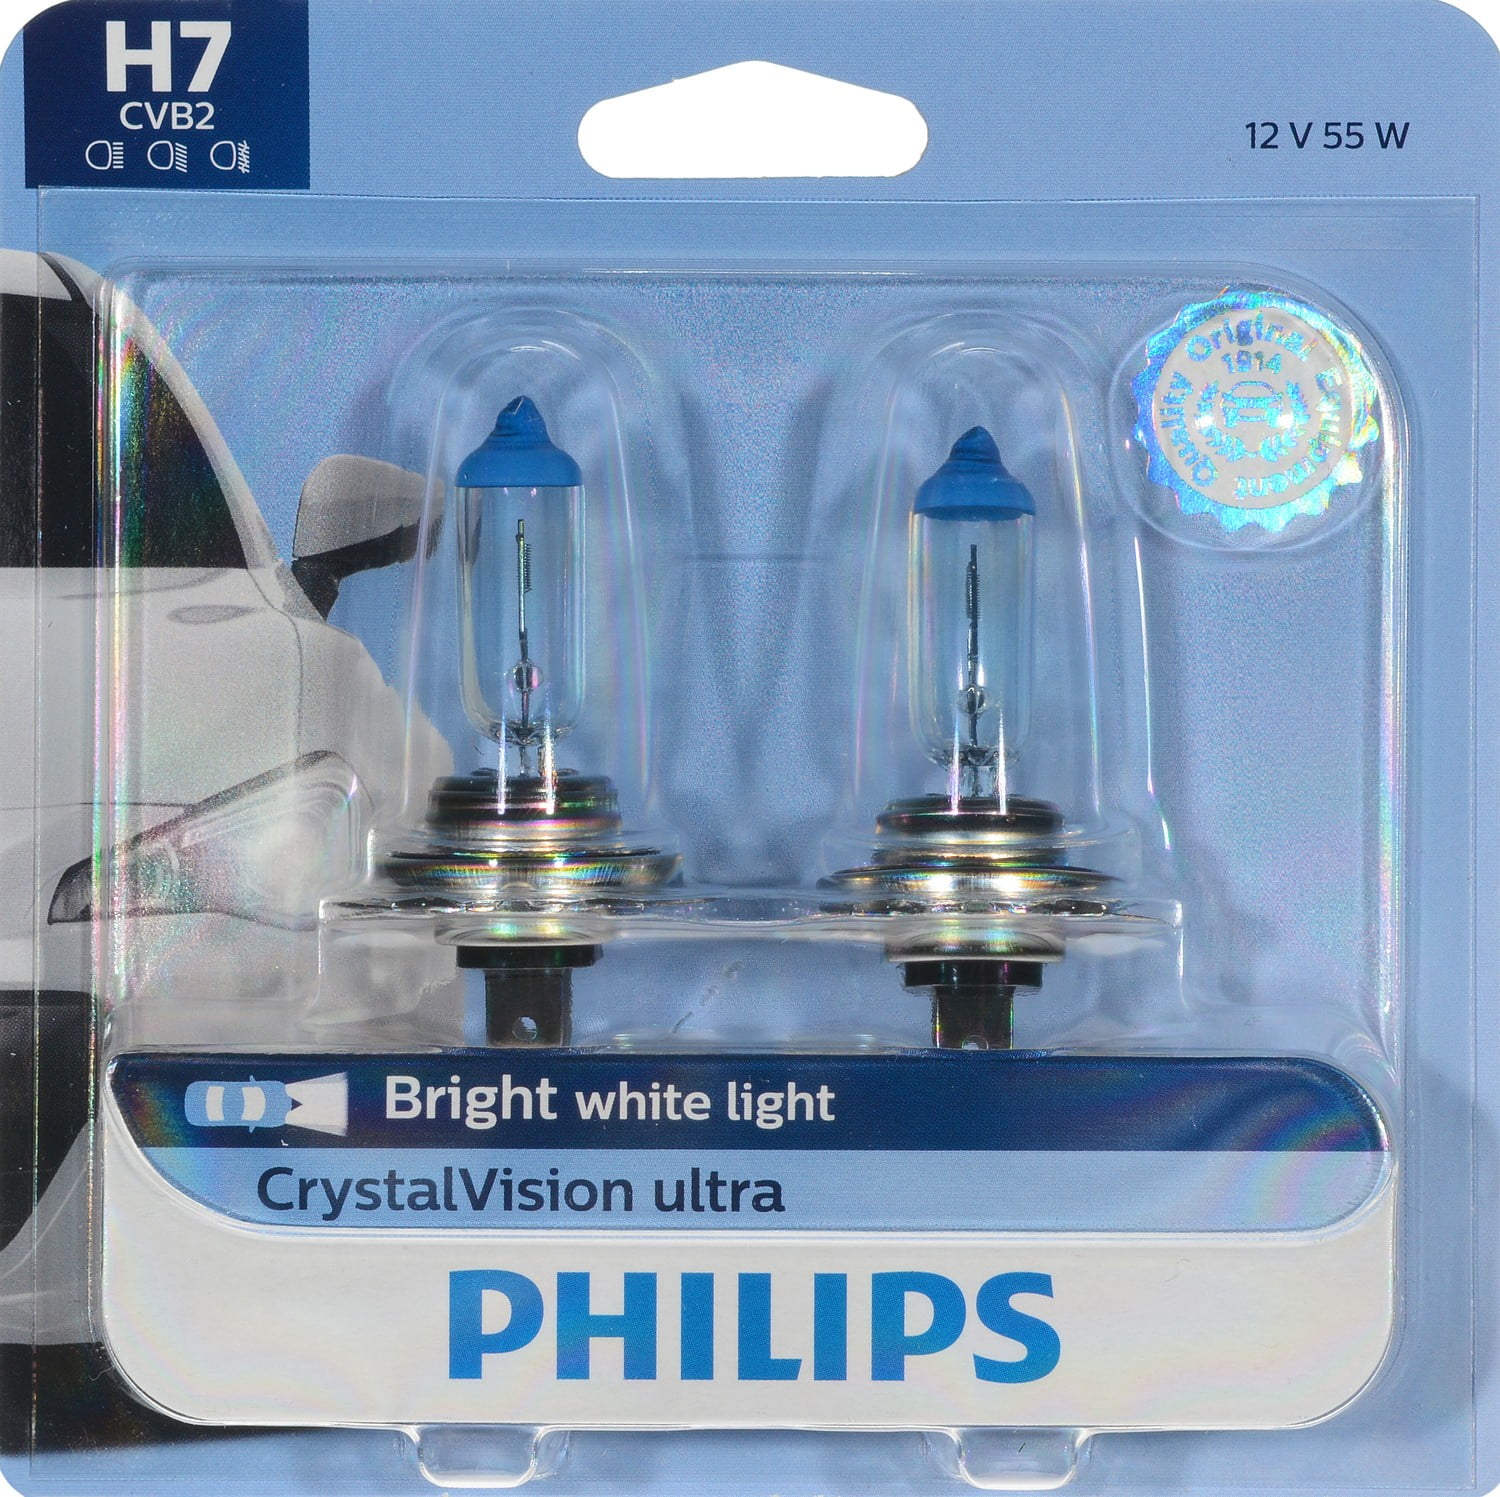 Philips Crystal Vision Ultra H7 + 2 Free Park Light Bulbs